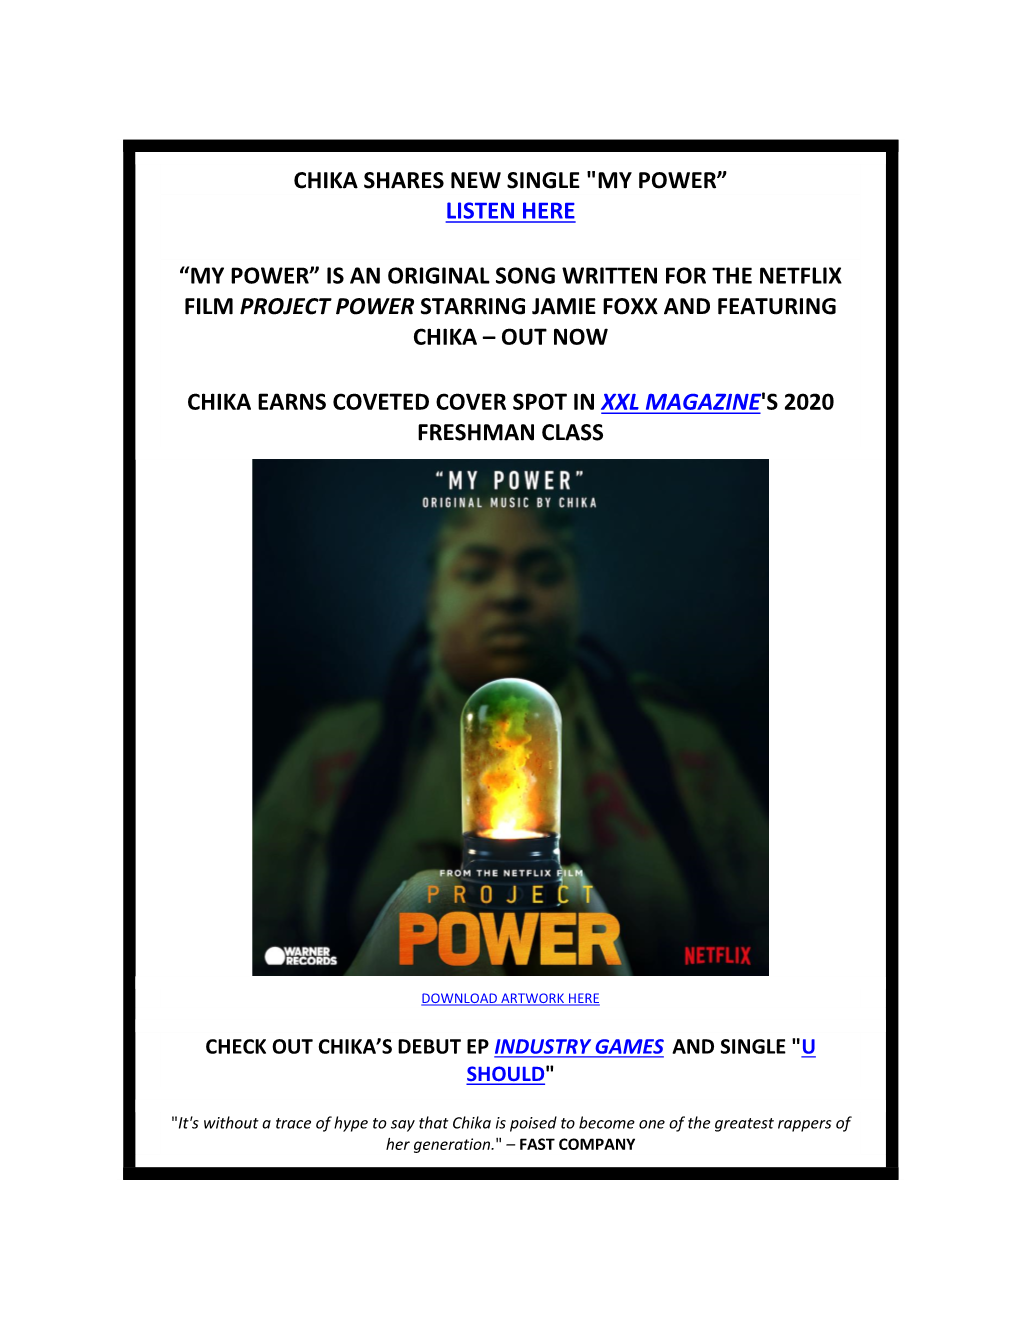 Chika Shares New Single "My Power” Listen Here